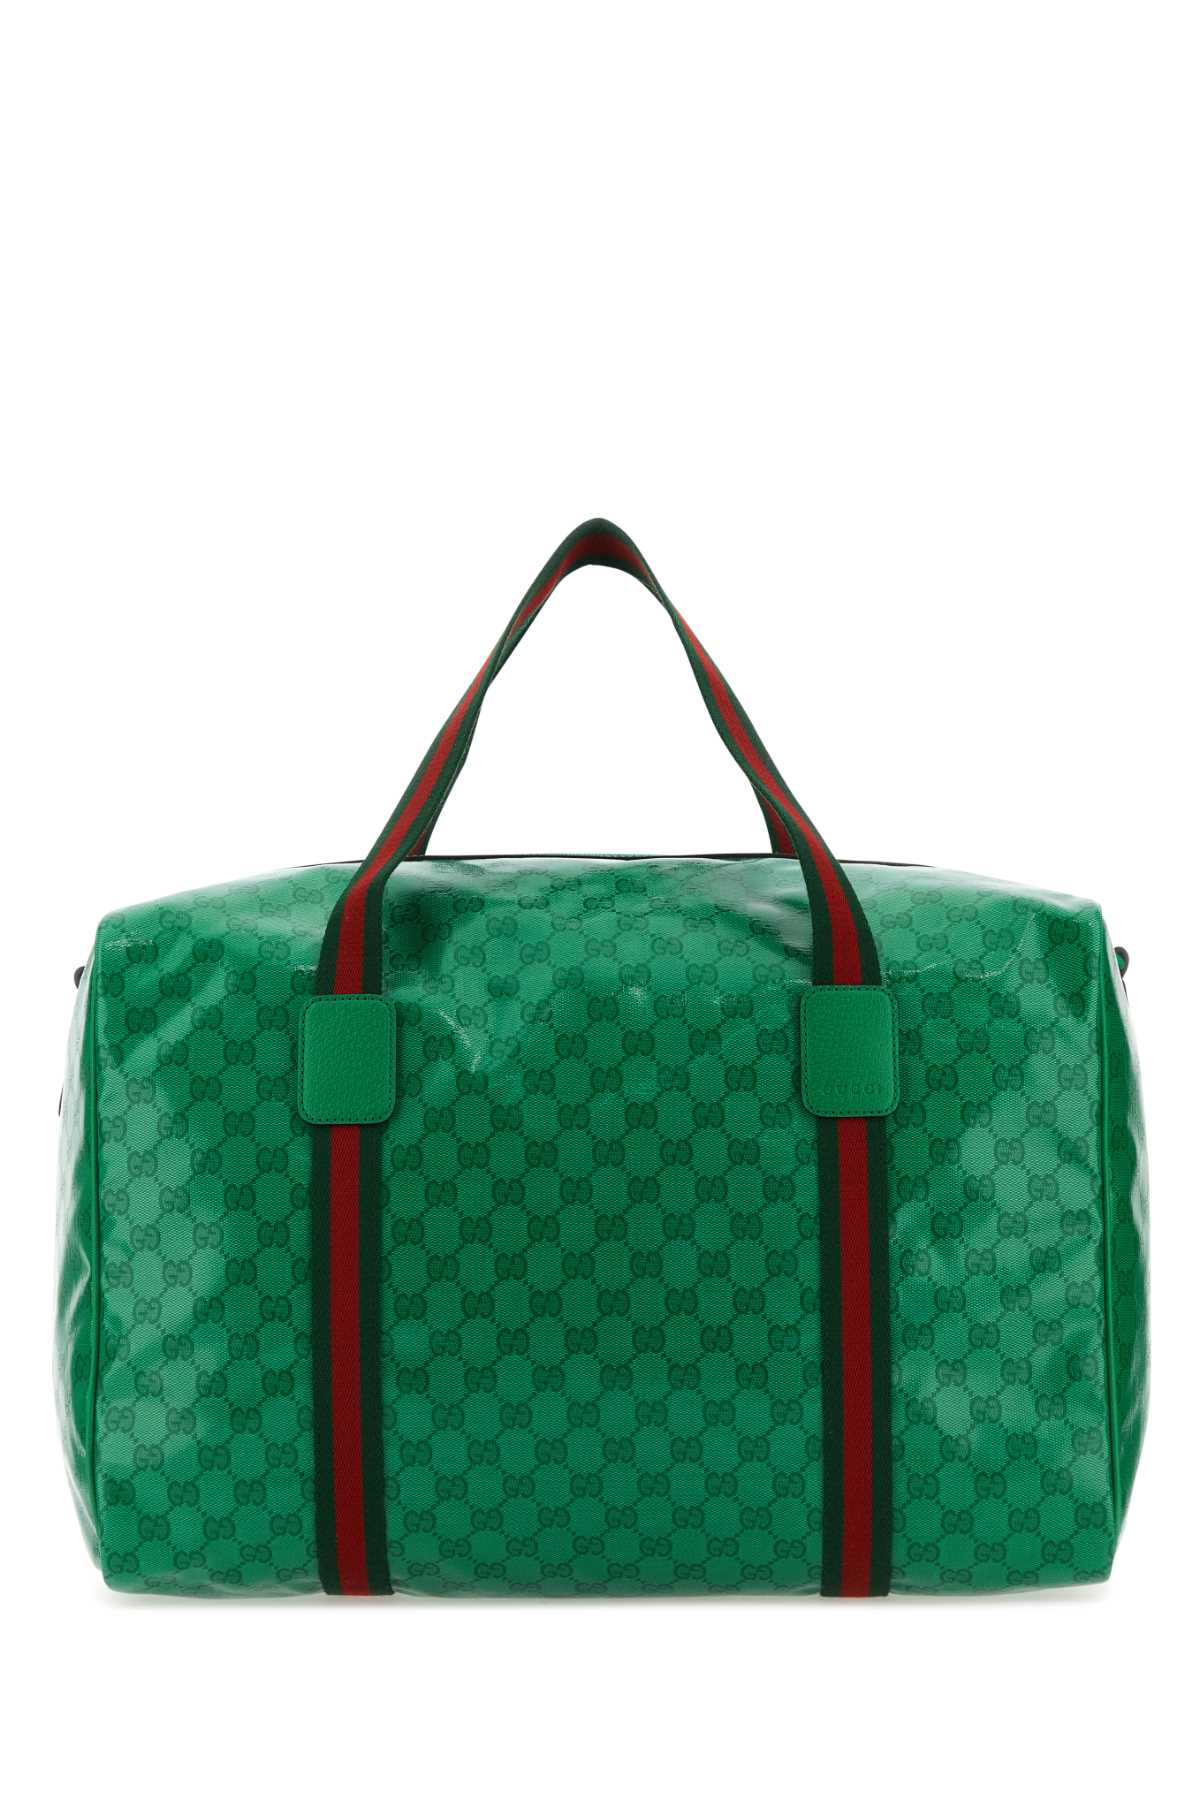 Gucci Green Gg Crystal Fabric Travel Bag